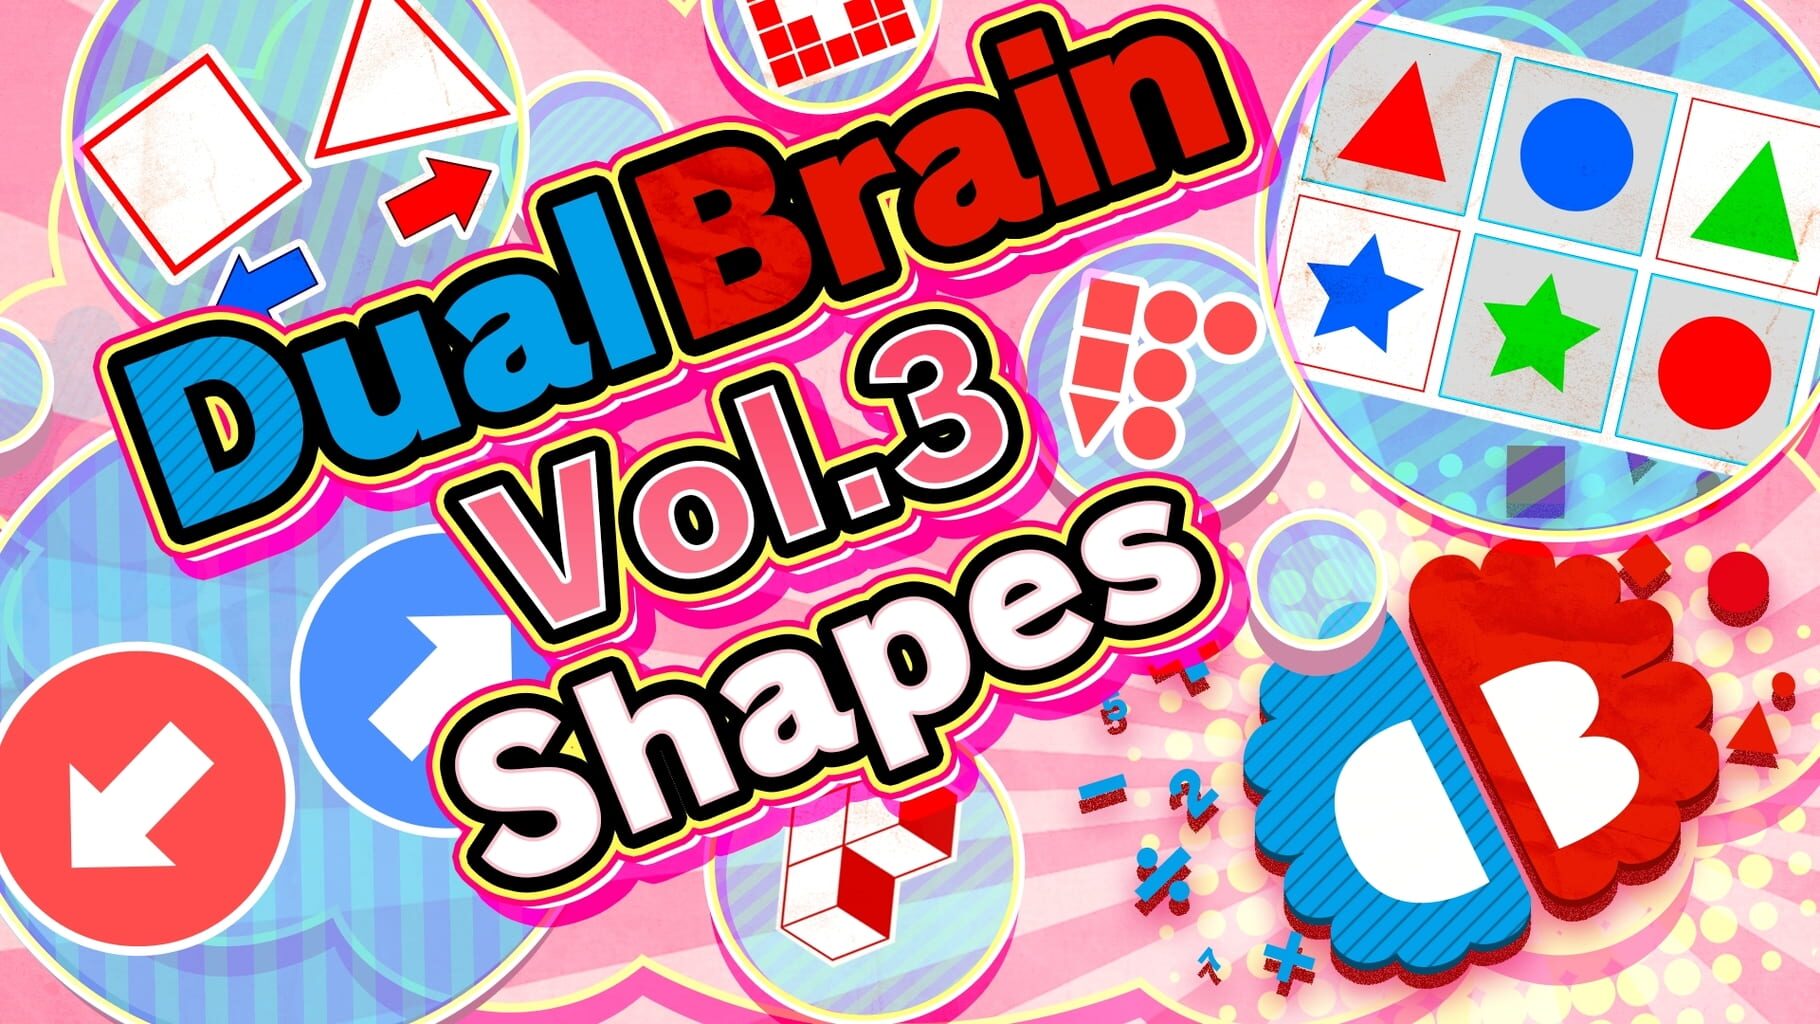 Dual Brain Vol.3: Shapes artwork